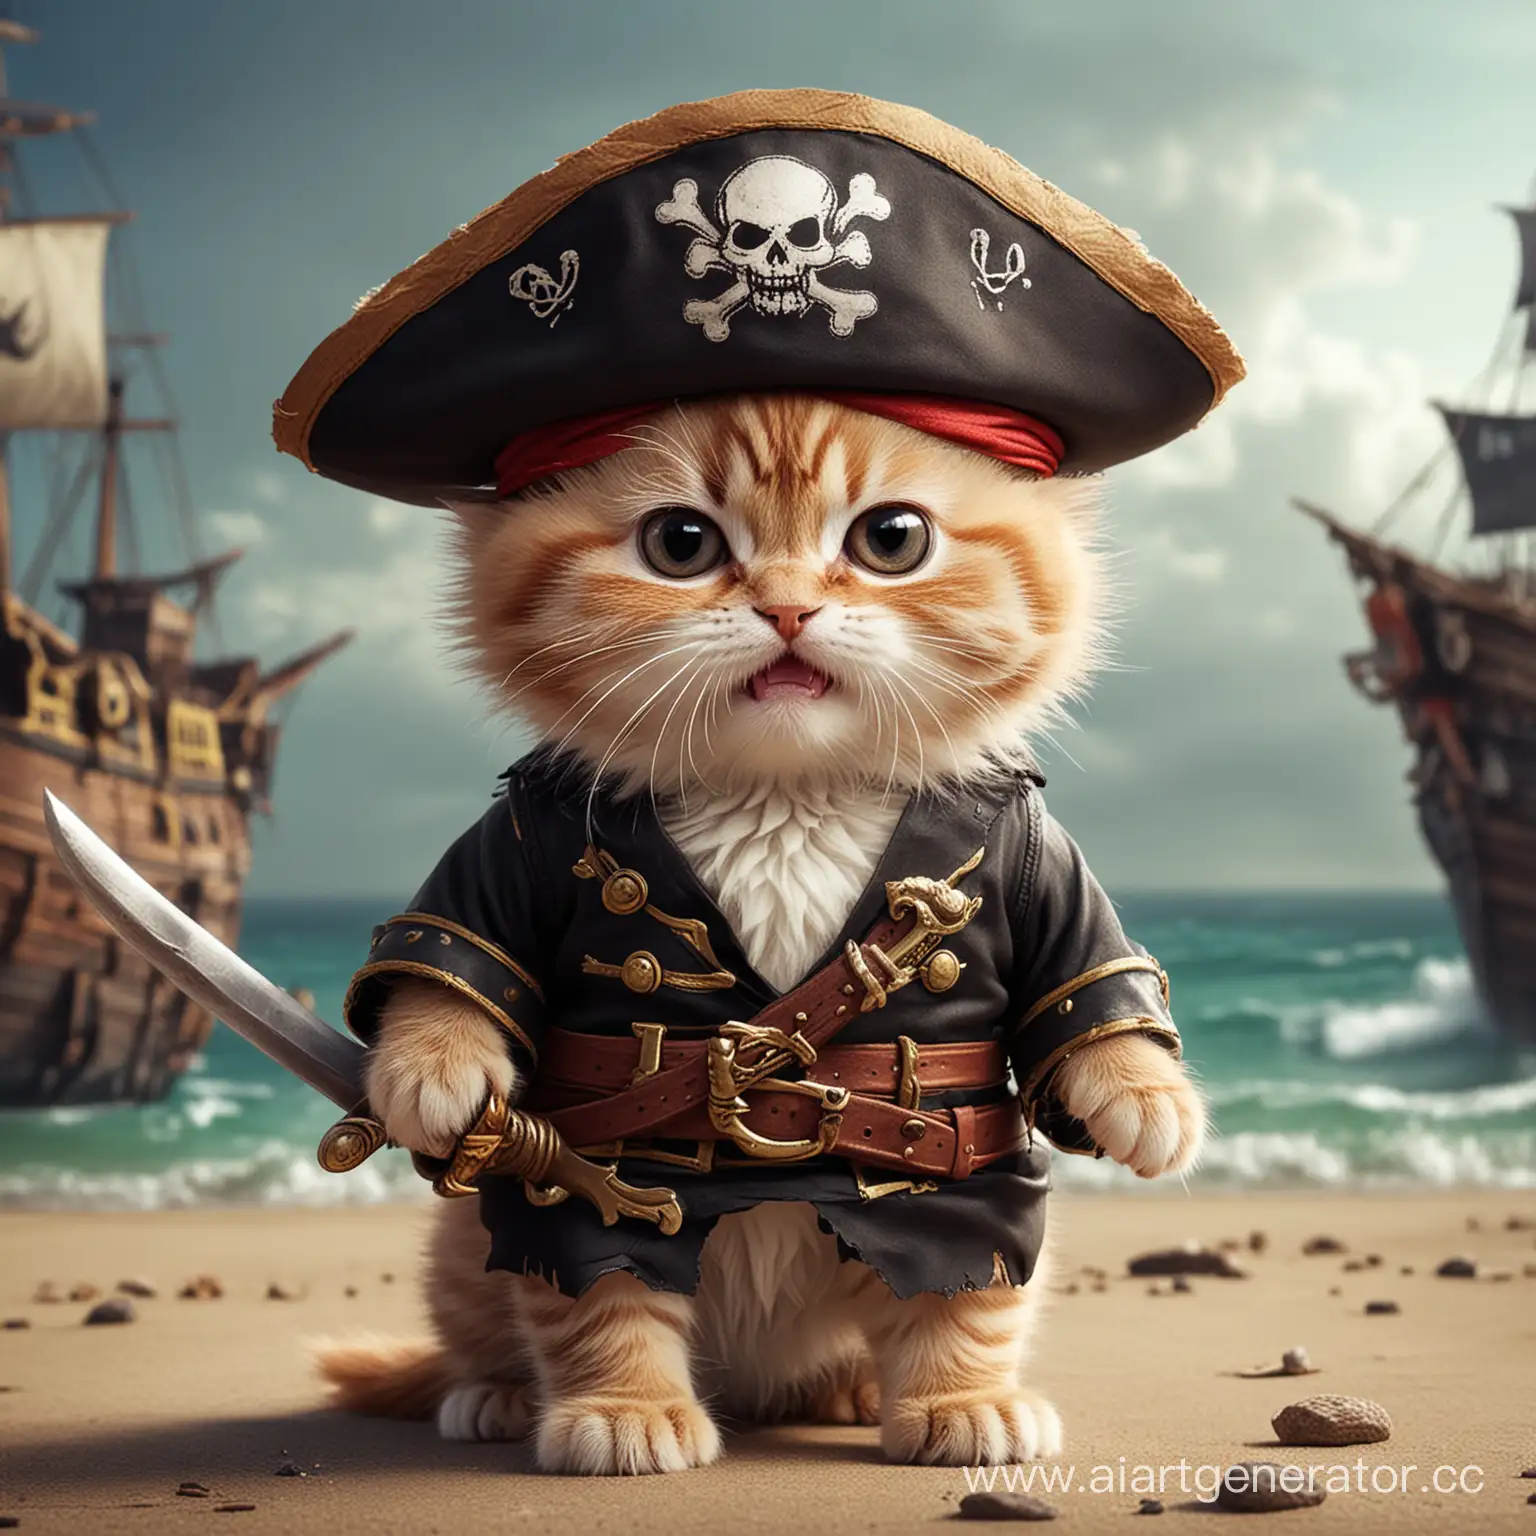 Fierce-Kitten-Pirate-with-Swashbuckling-Attitude